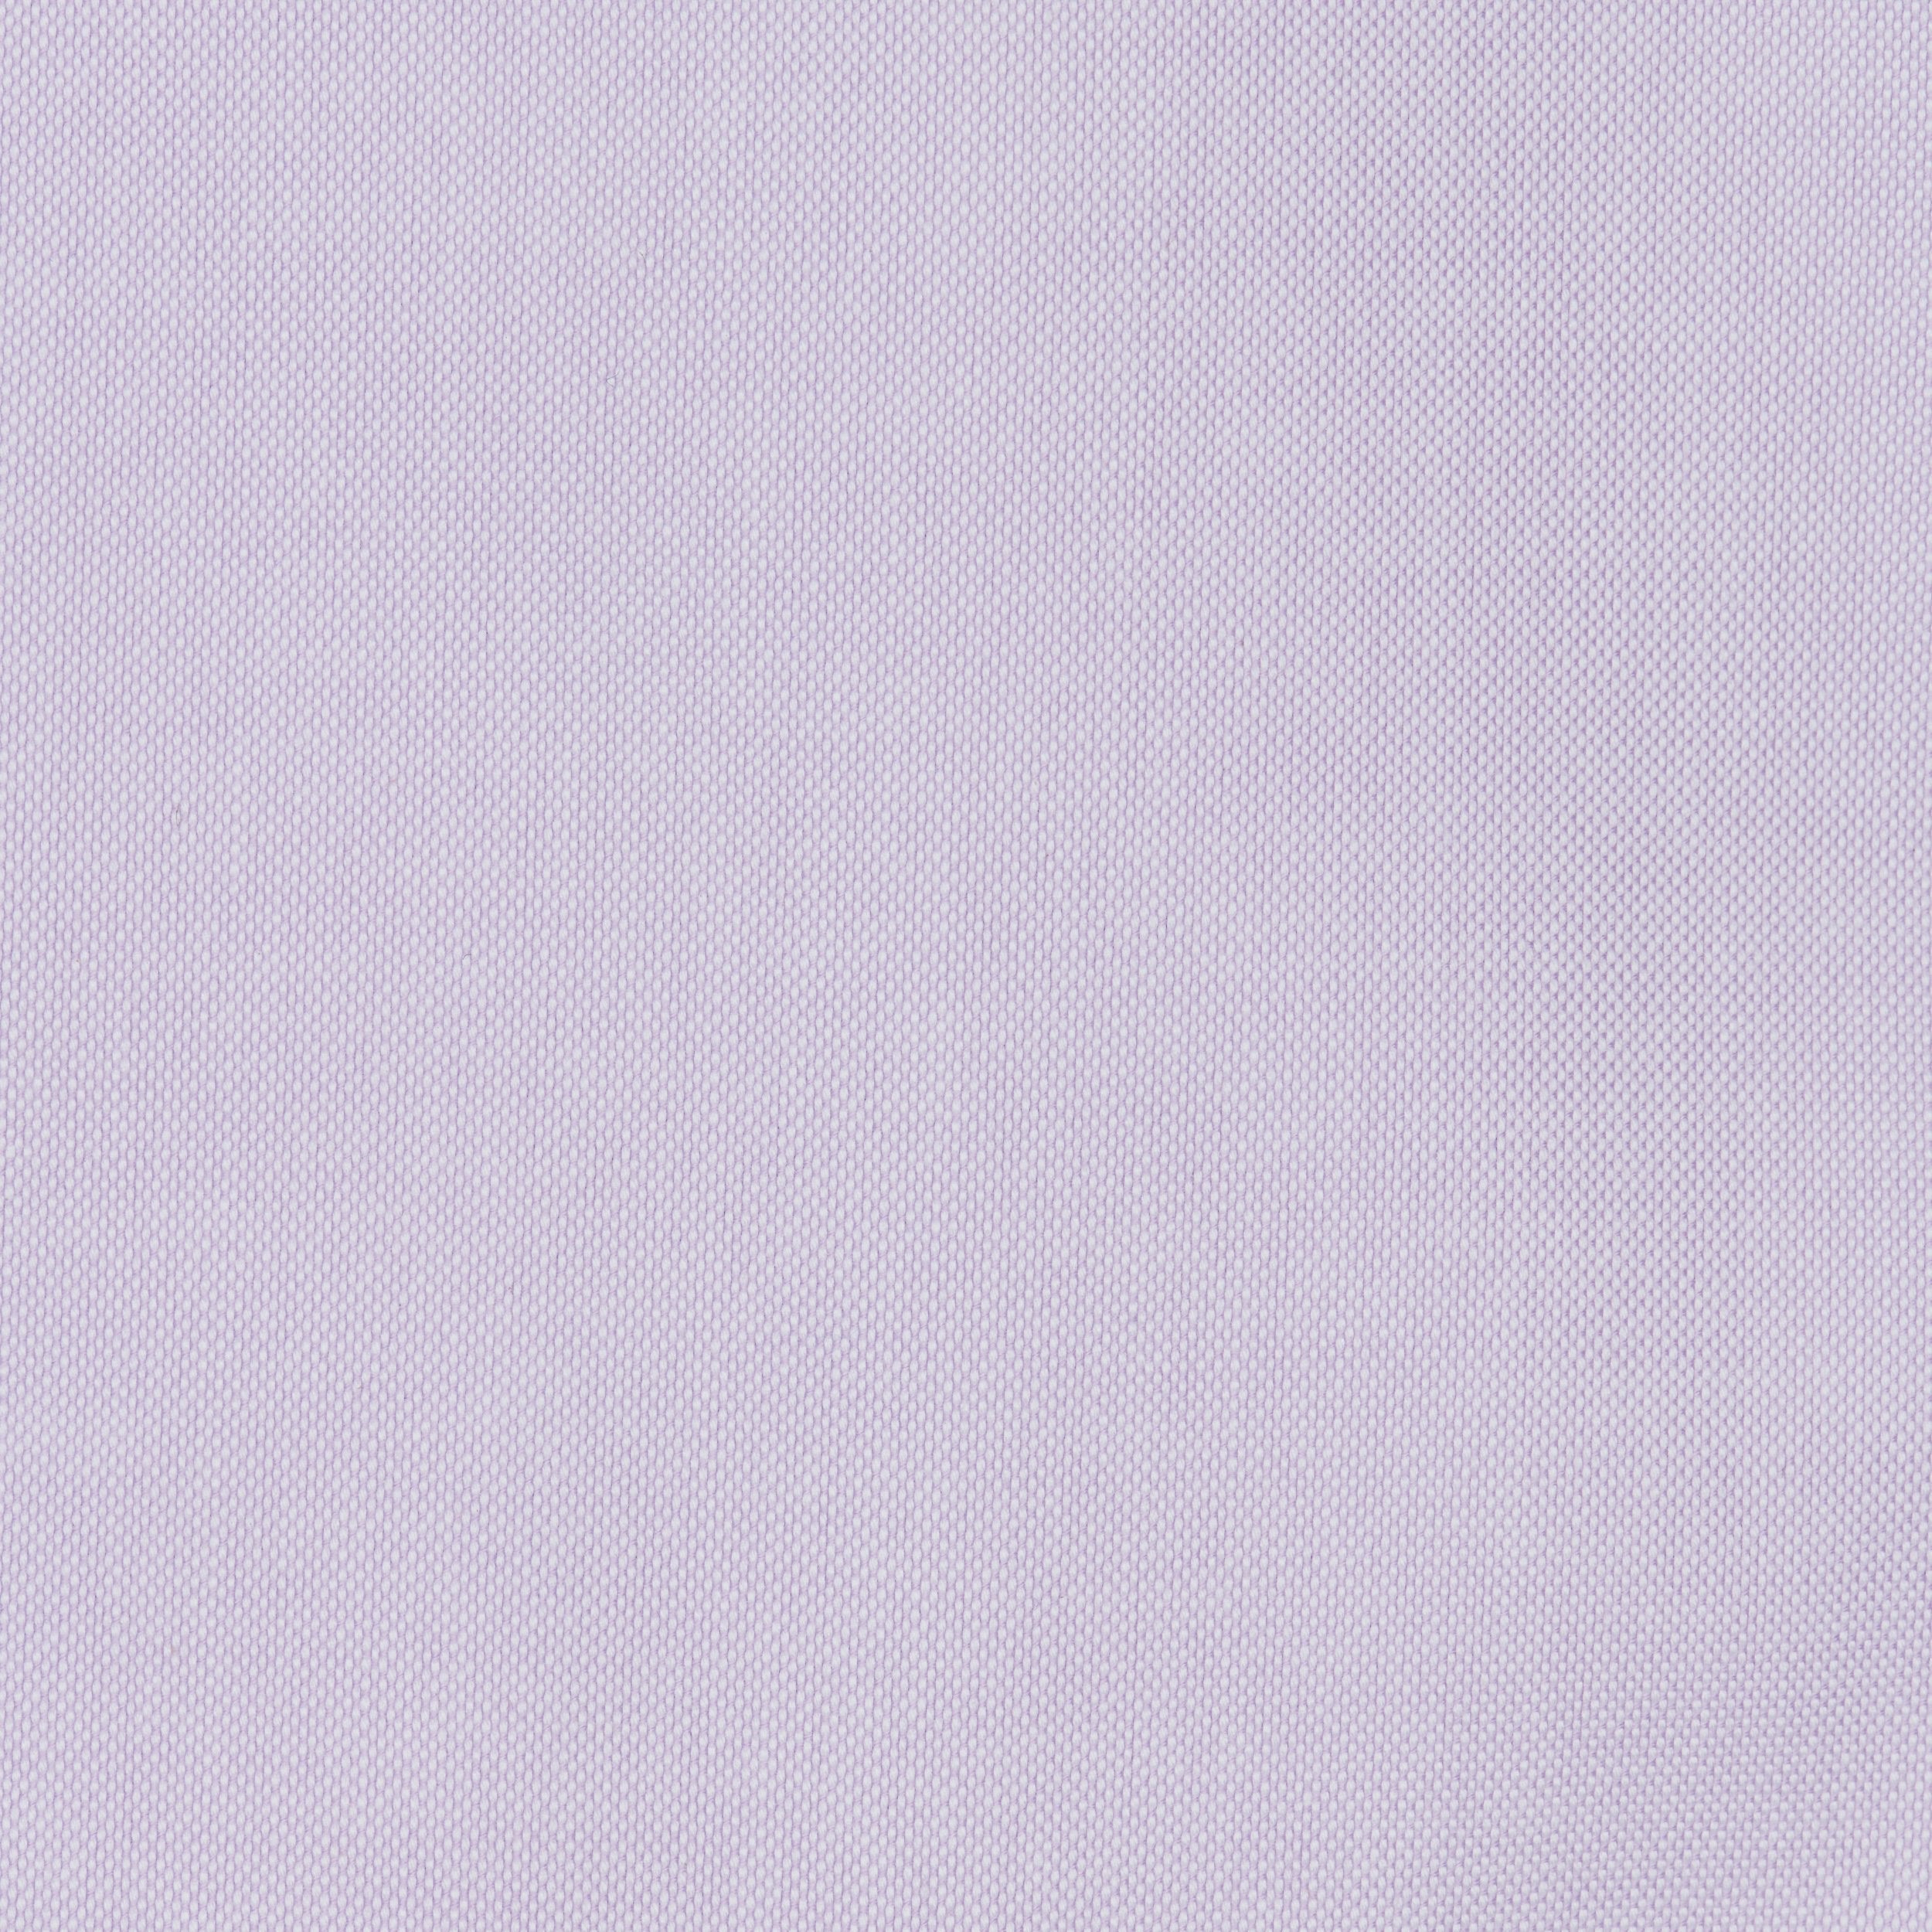 038-Lavender-Spread Collar-Tailor Fit Best Dress Shirt 